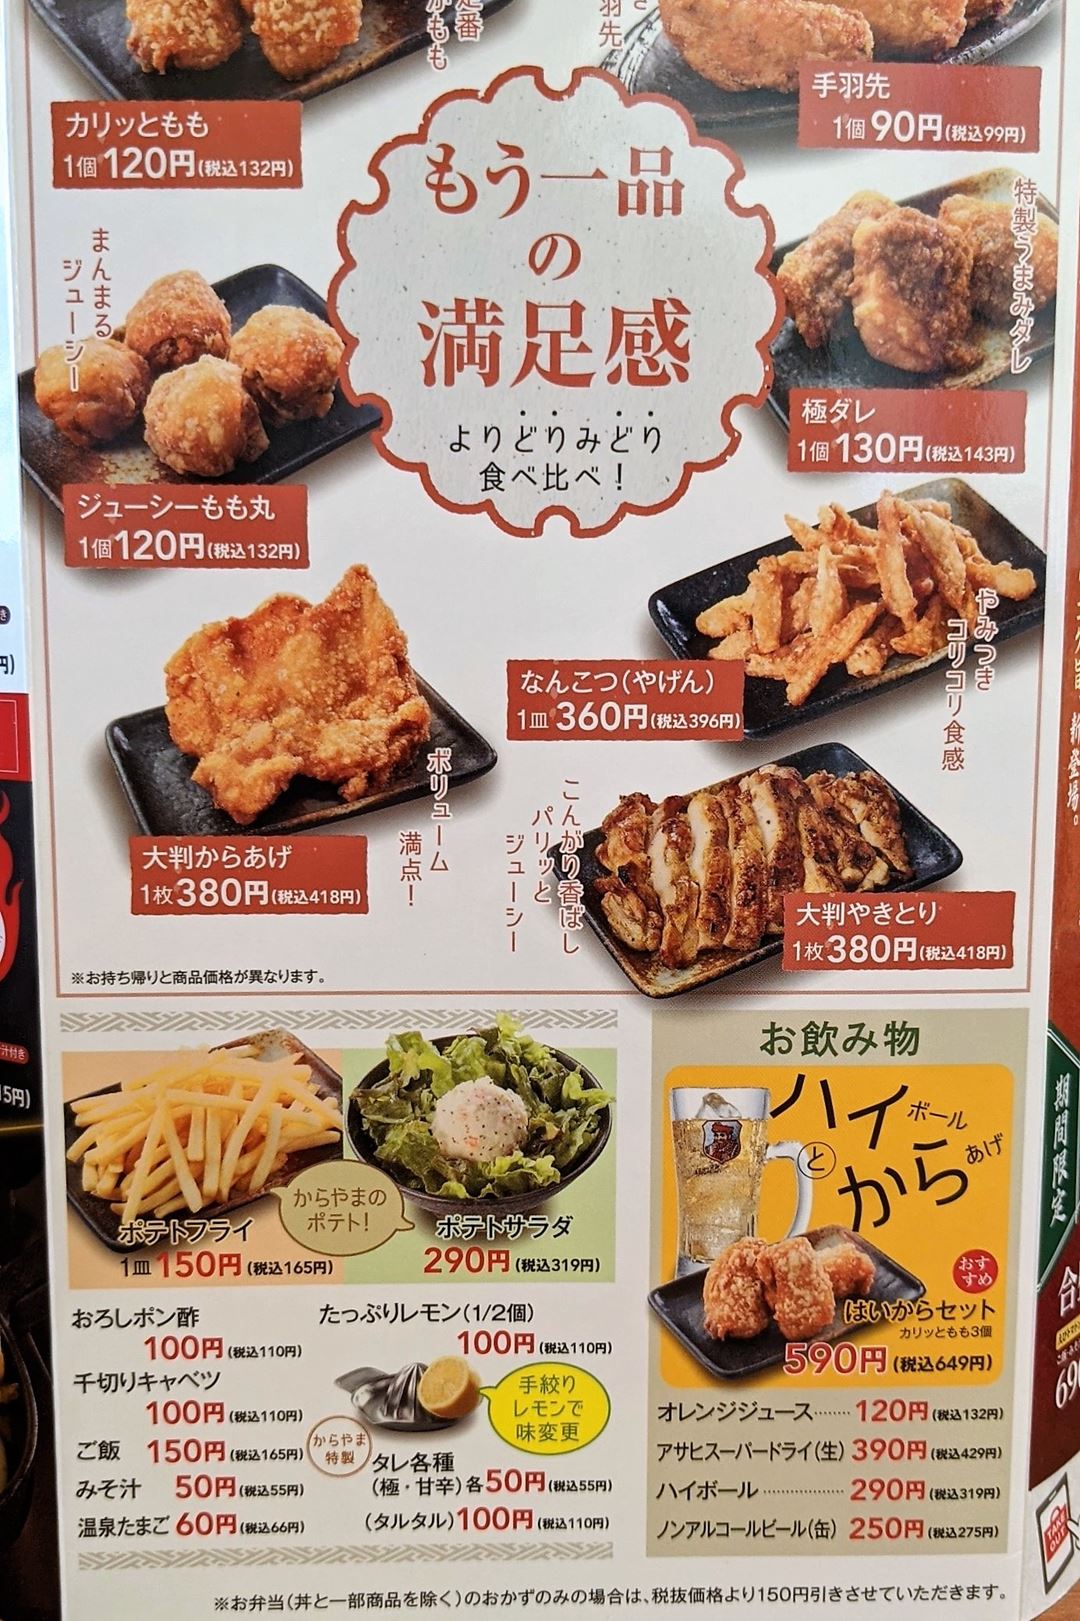 Menu メニュー 2021 - 唐揚げ Deep fried chicken KARAYAMA からあげ からやま